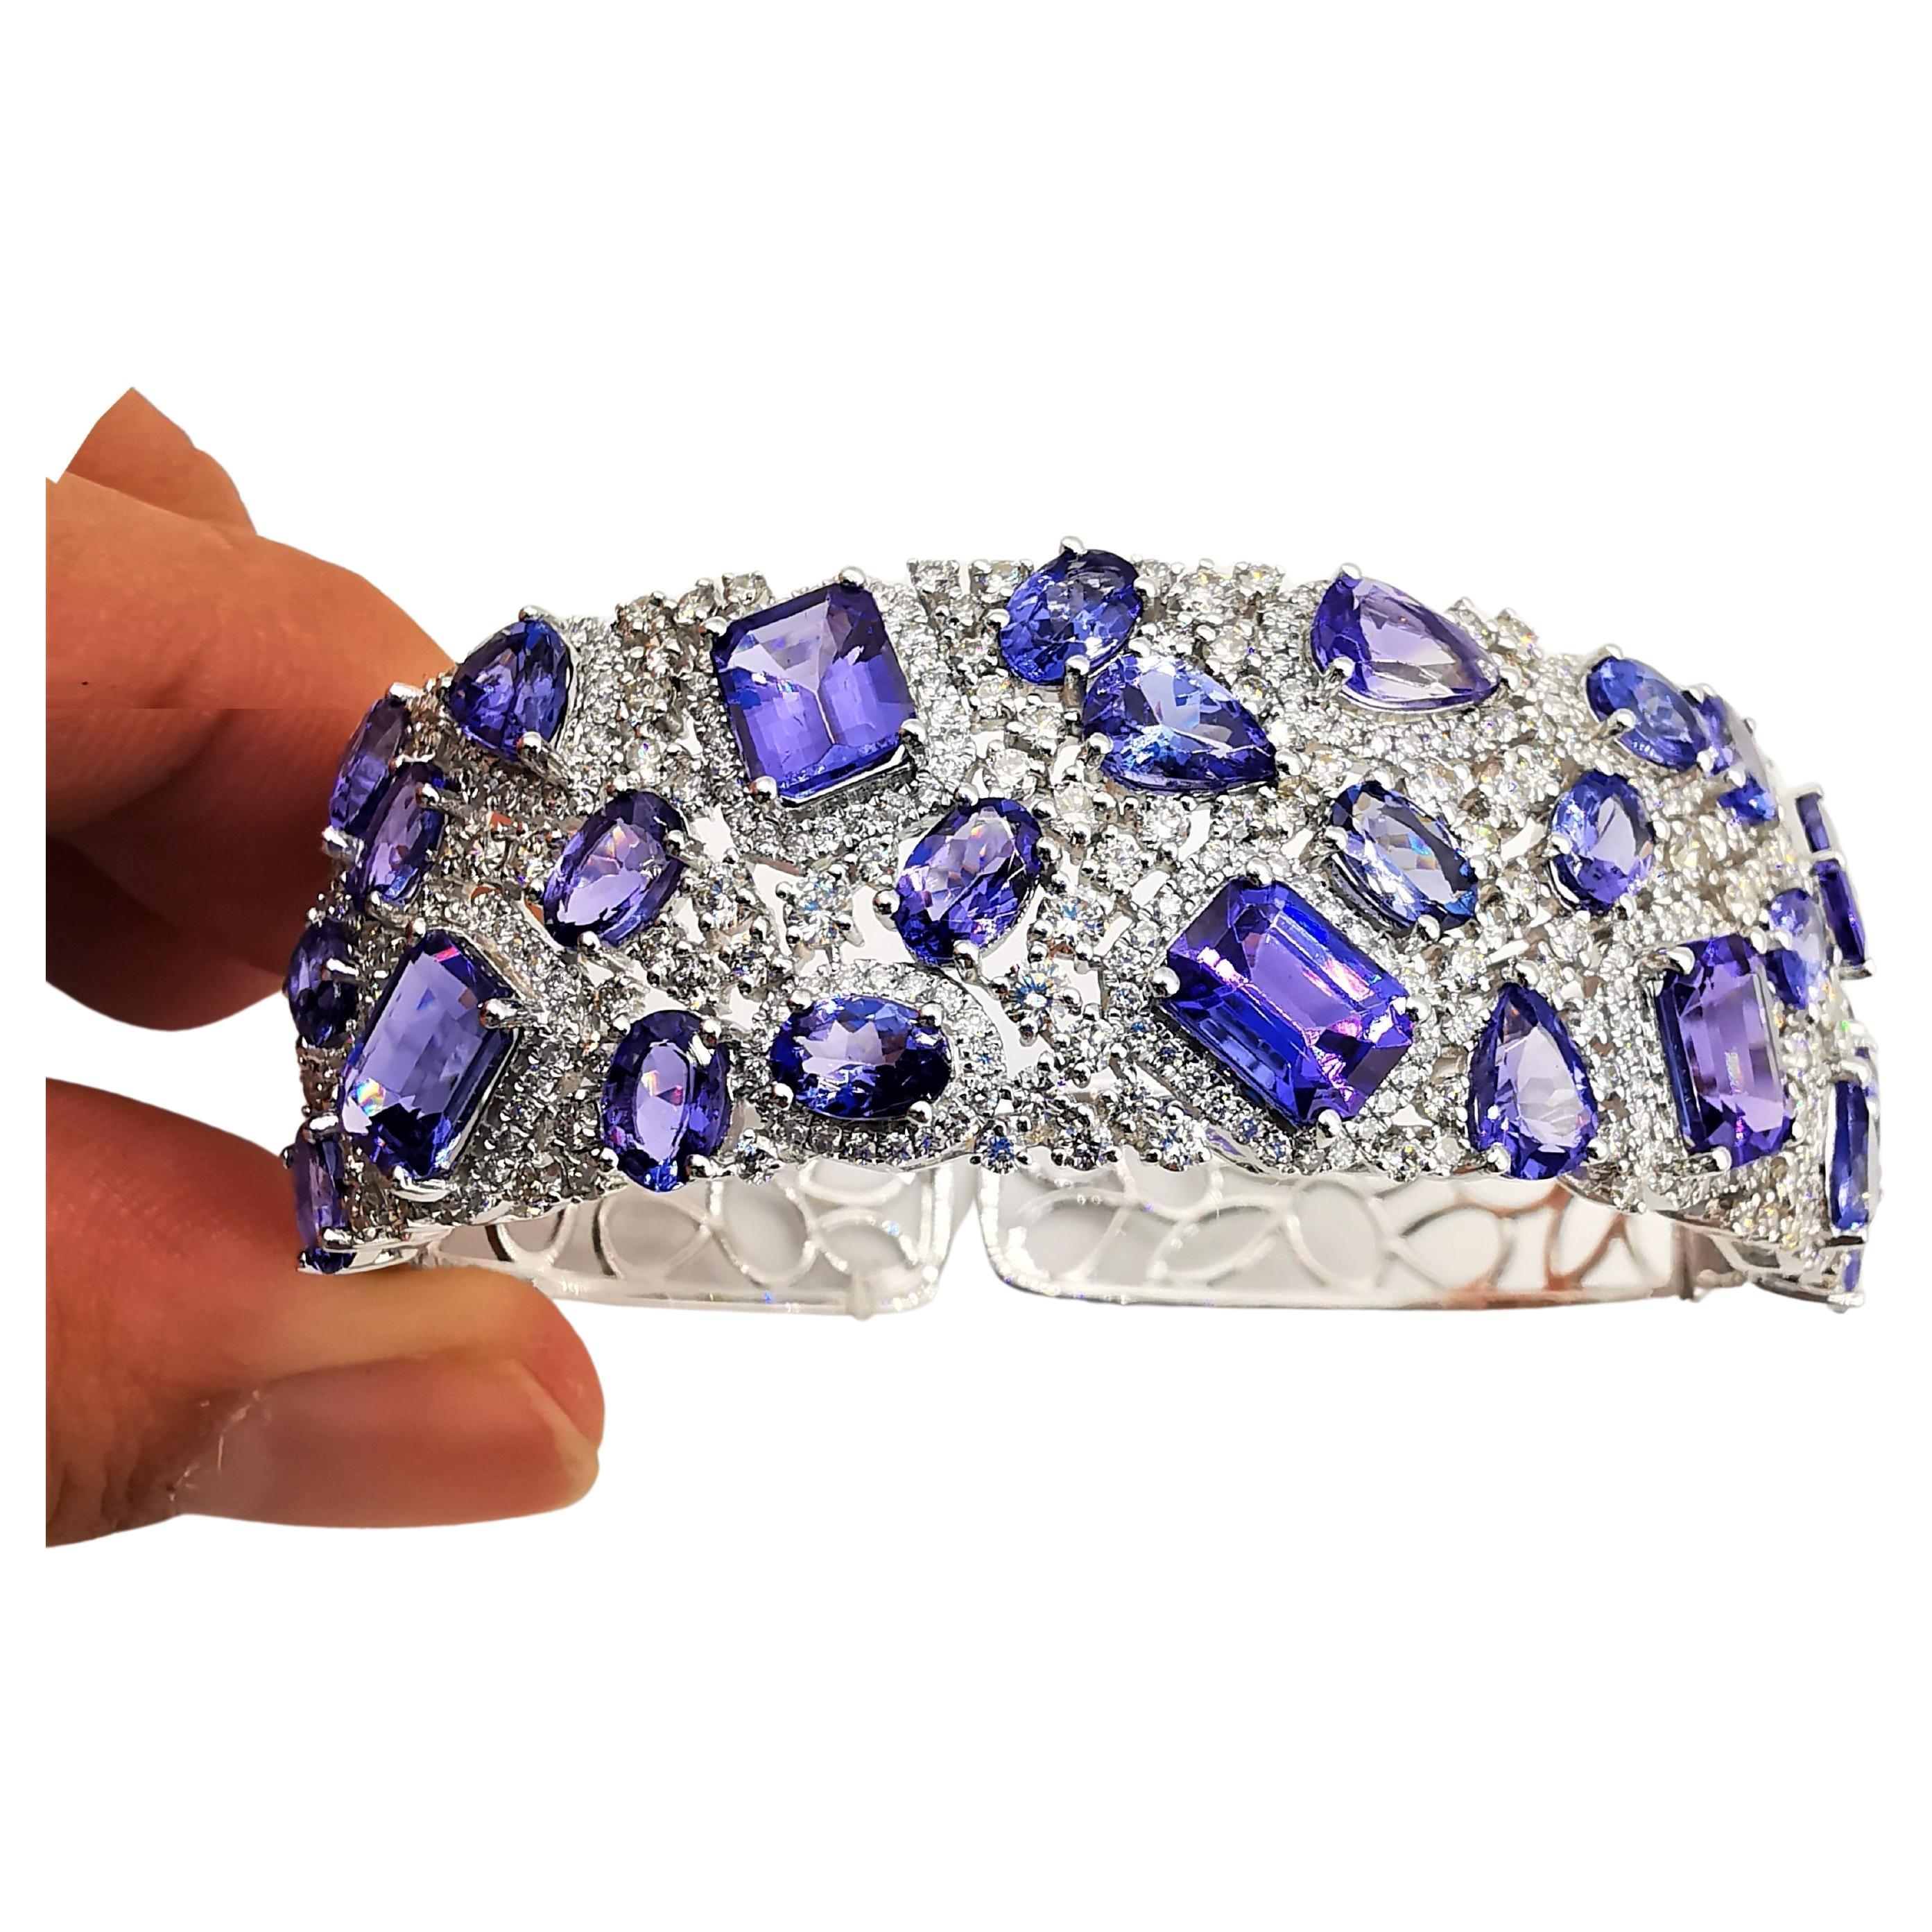 NWT 39, 000 Rare 18KT Gold Fancy Cut Glittering Tanzanite Diamond Bangle Bracelet